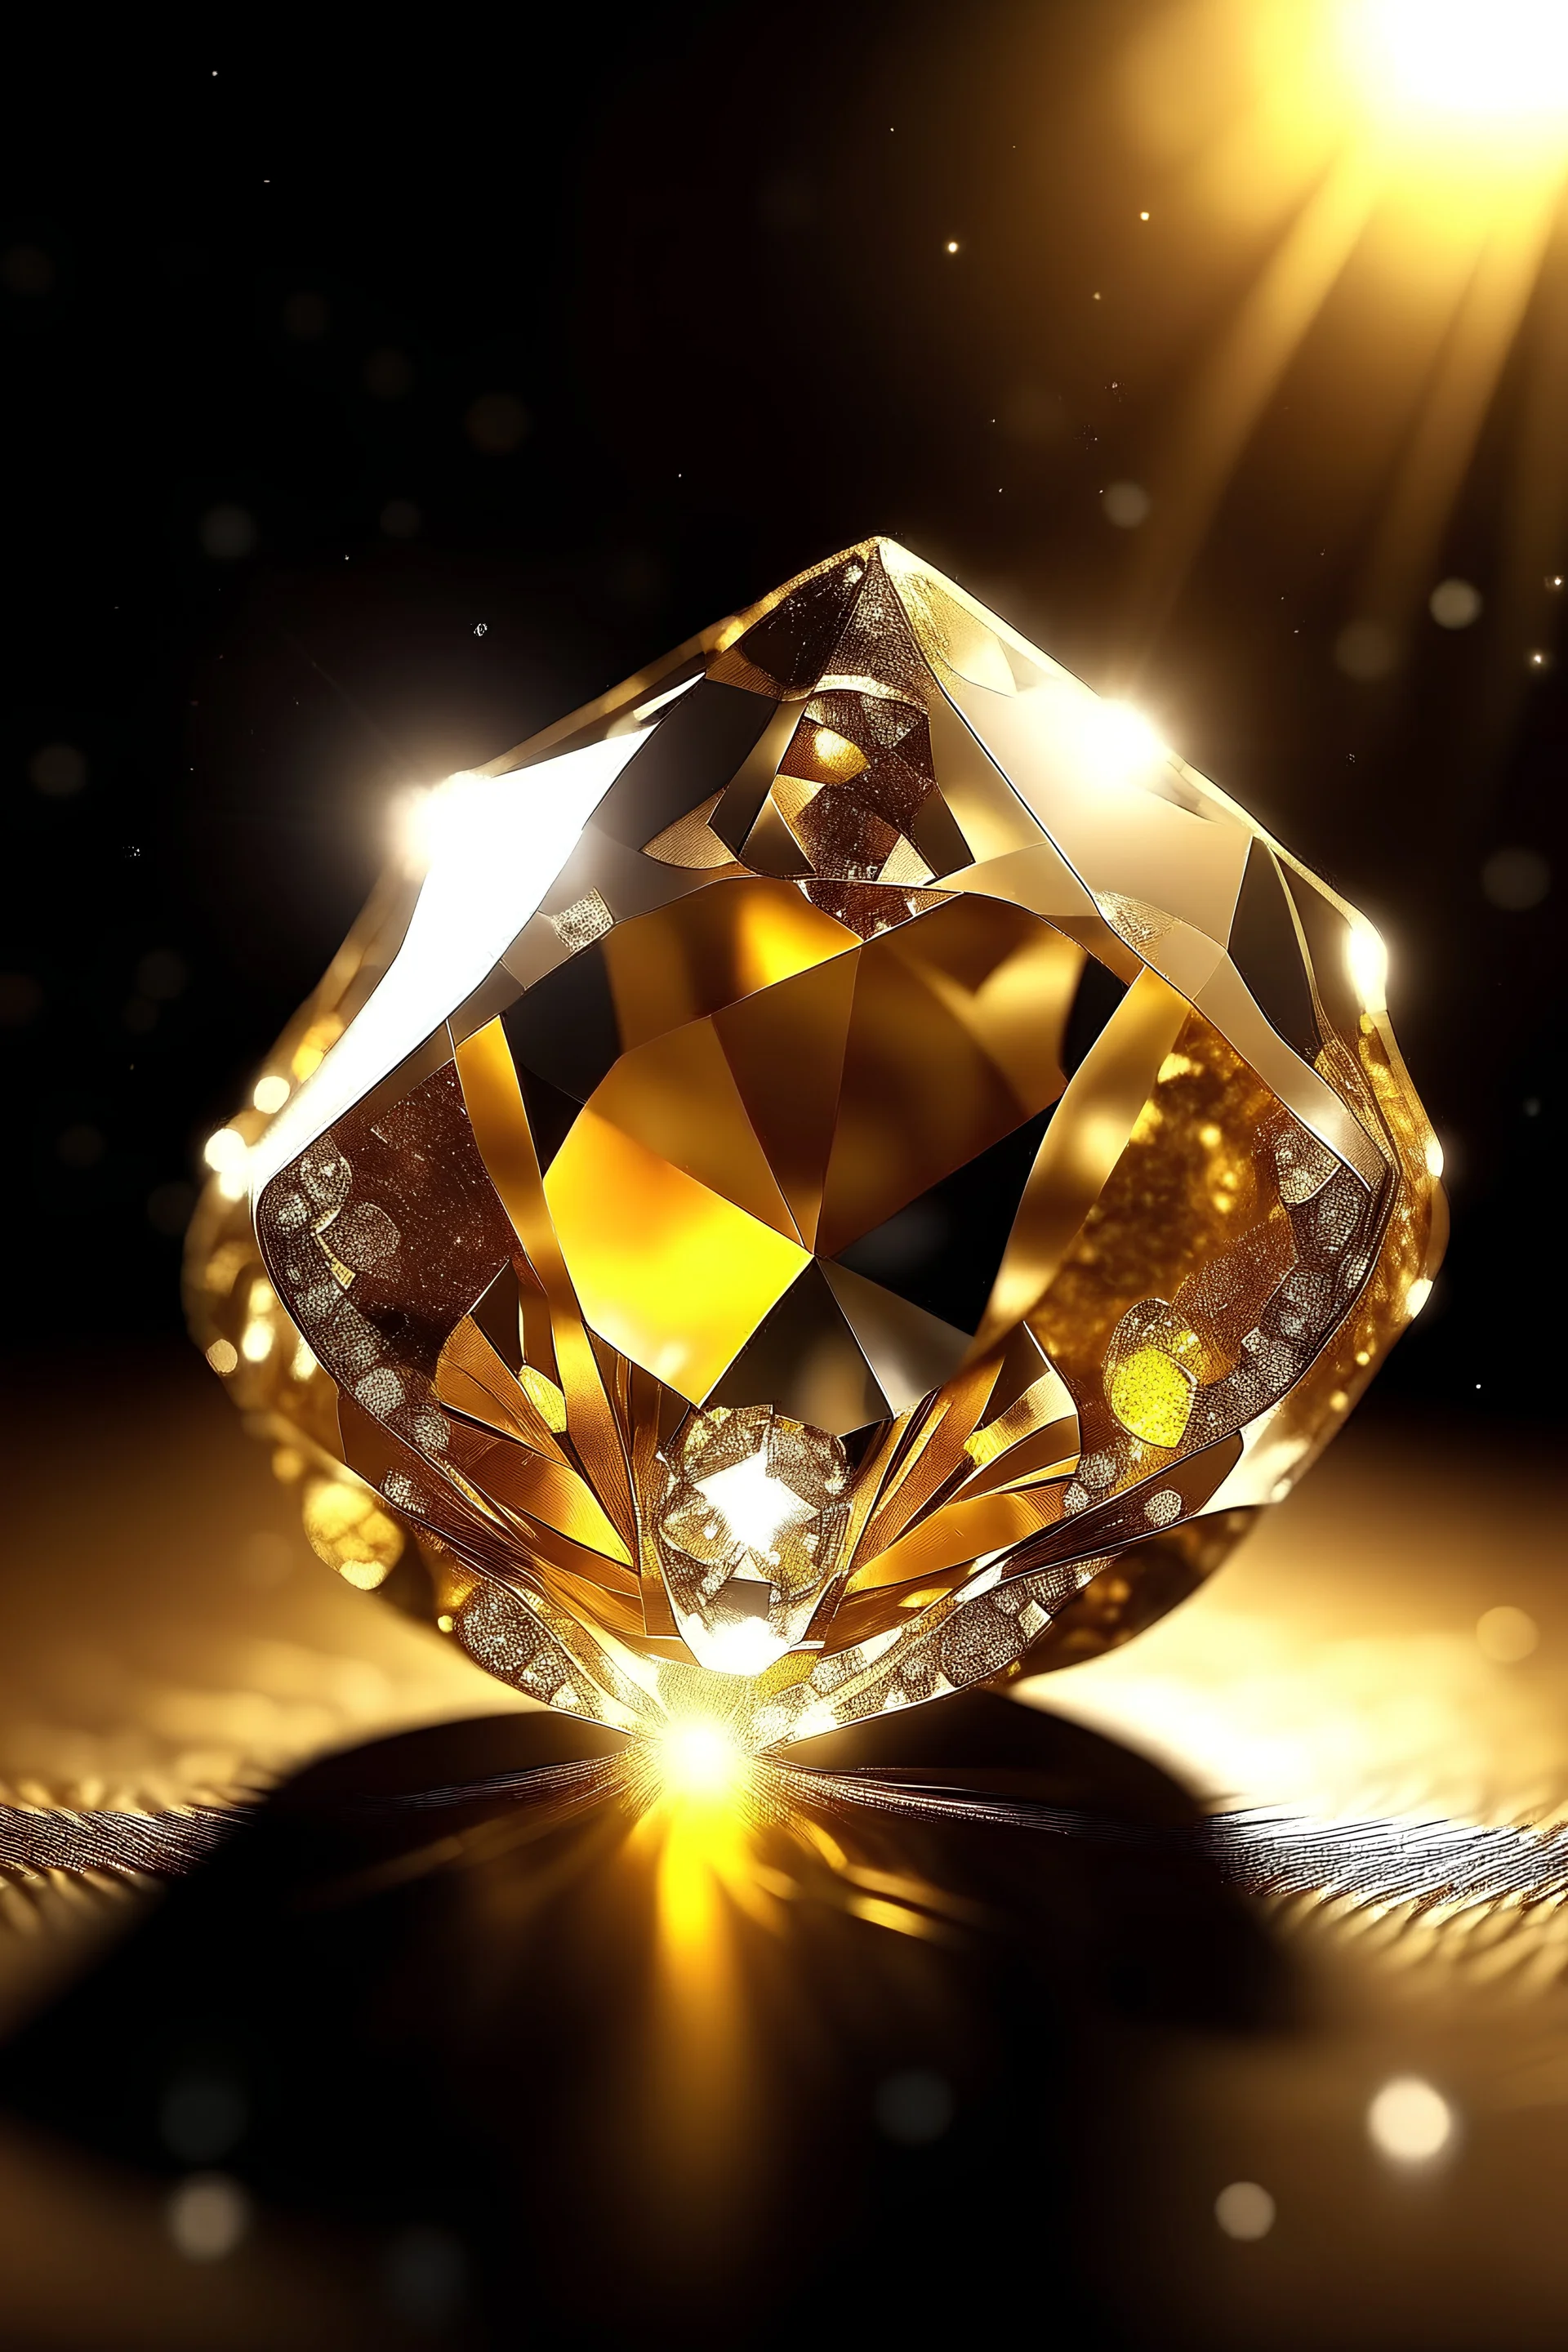 Create an image of a full glow of diamond golden light